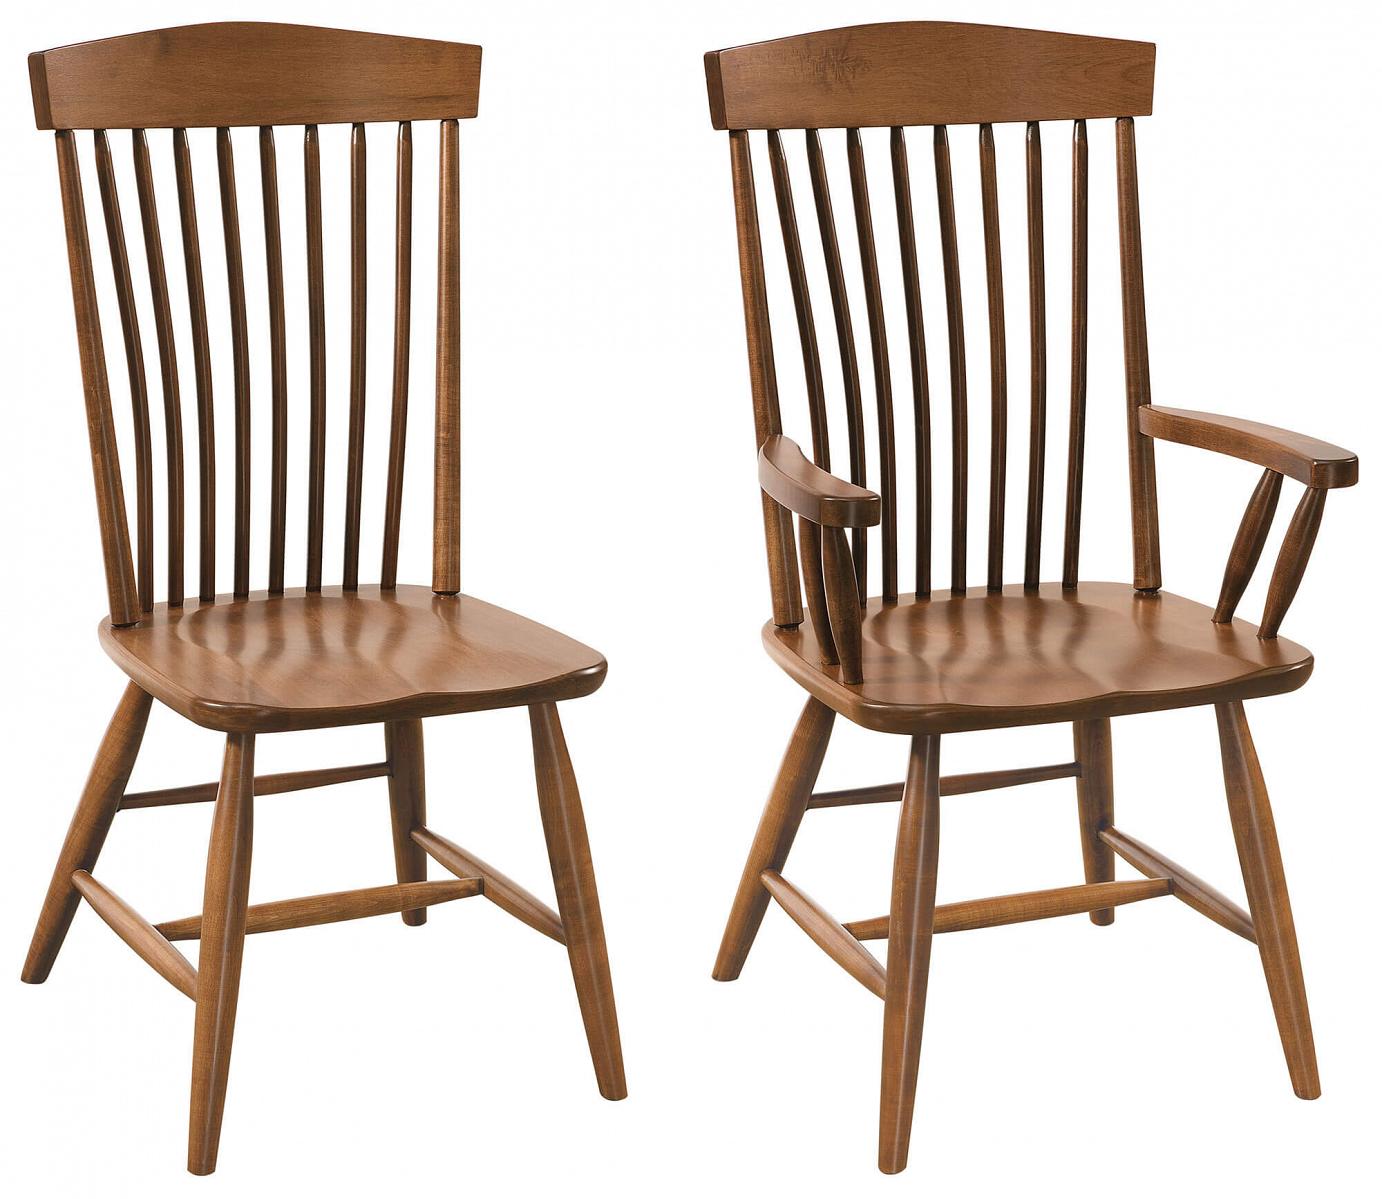 RH Yoder Arlington Chairs